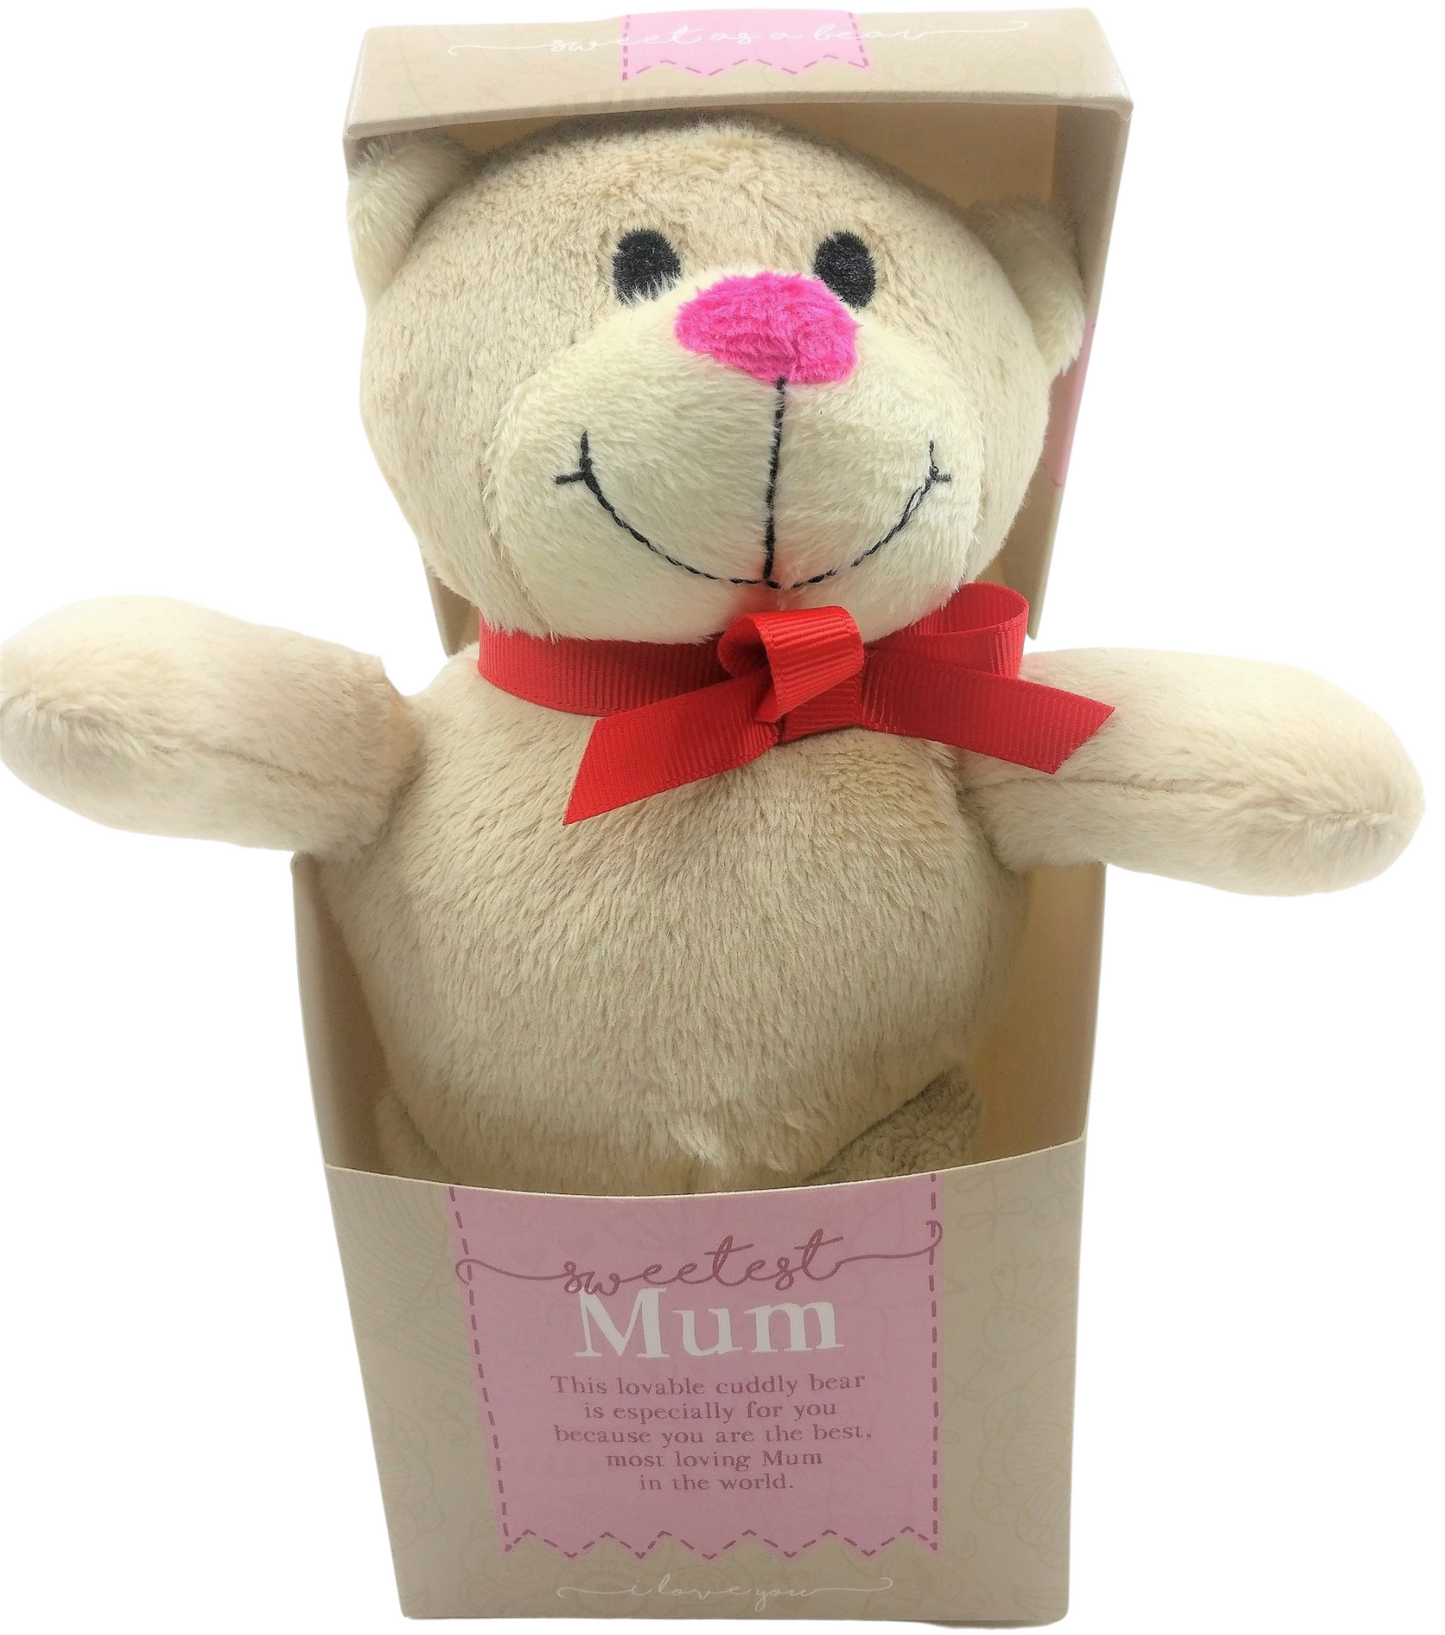 Sweetest Mum Bear in a Box